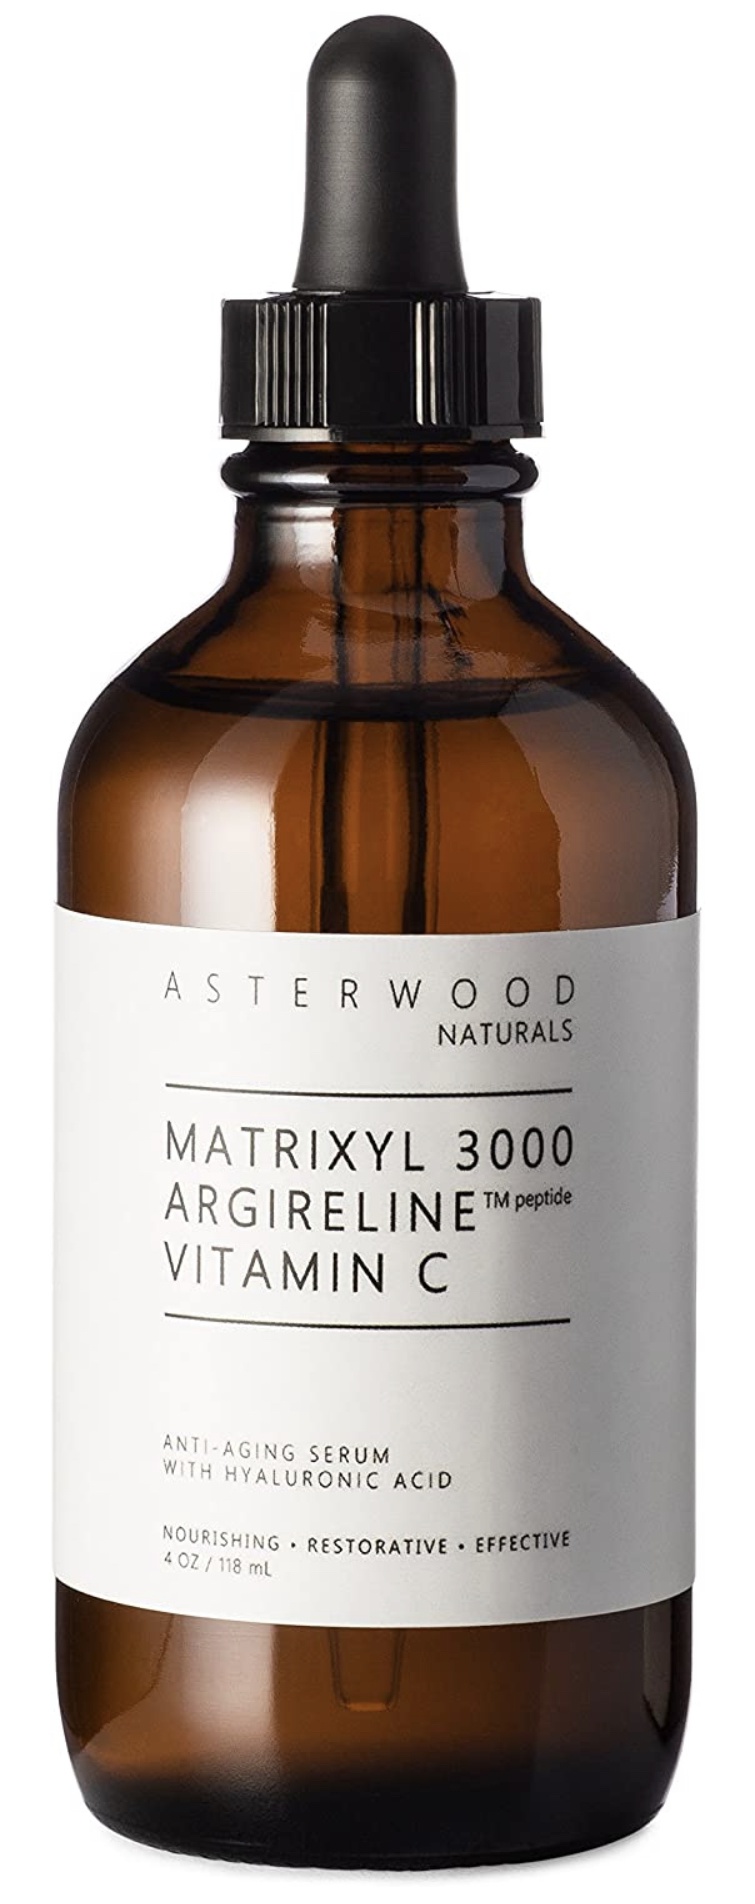 ASTERWOOD NATURALS Matrixyl 3000 + Argireline Peptide + Vitamin C